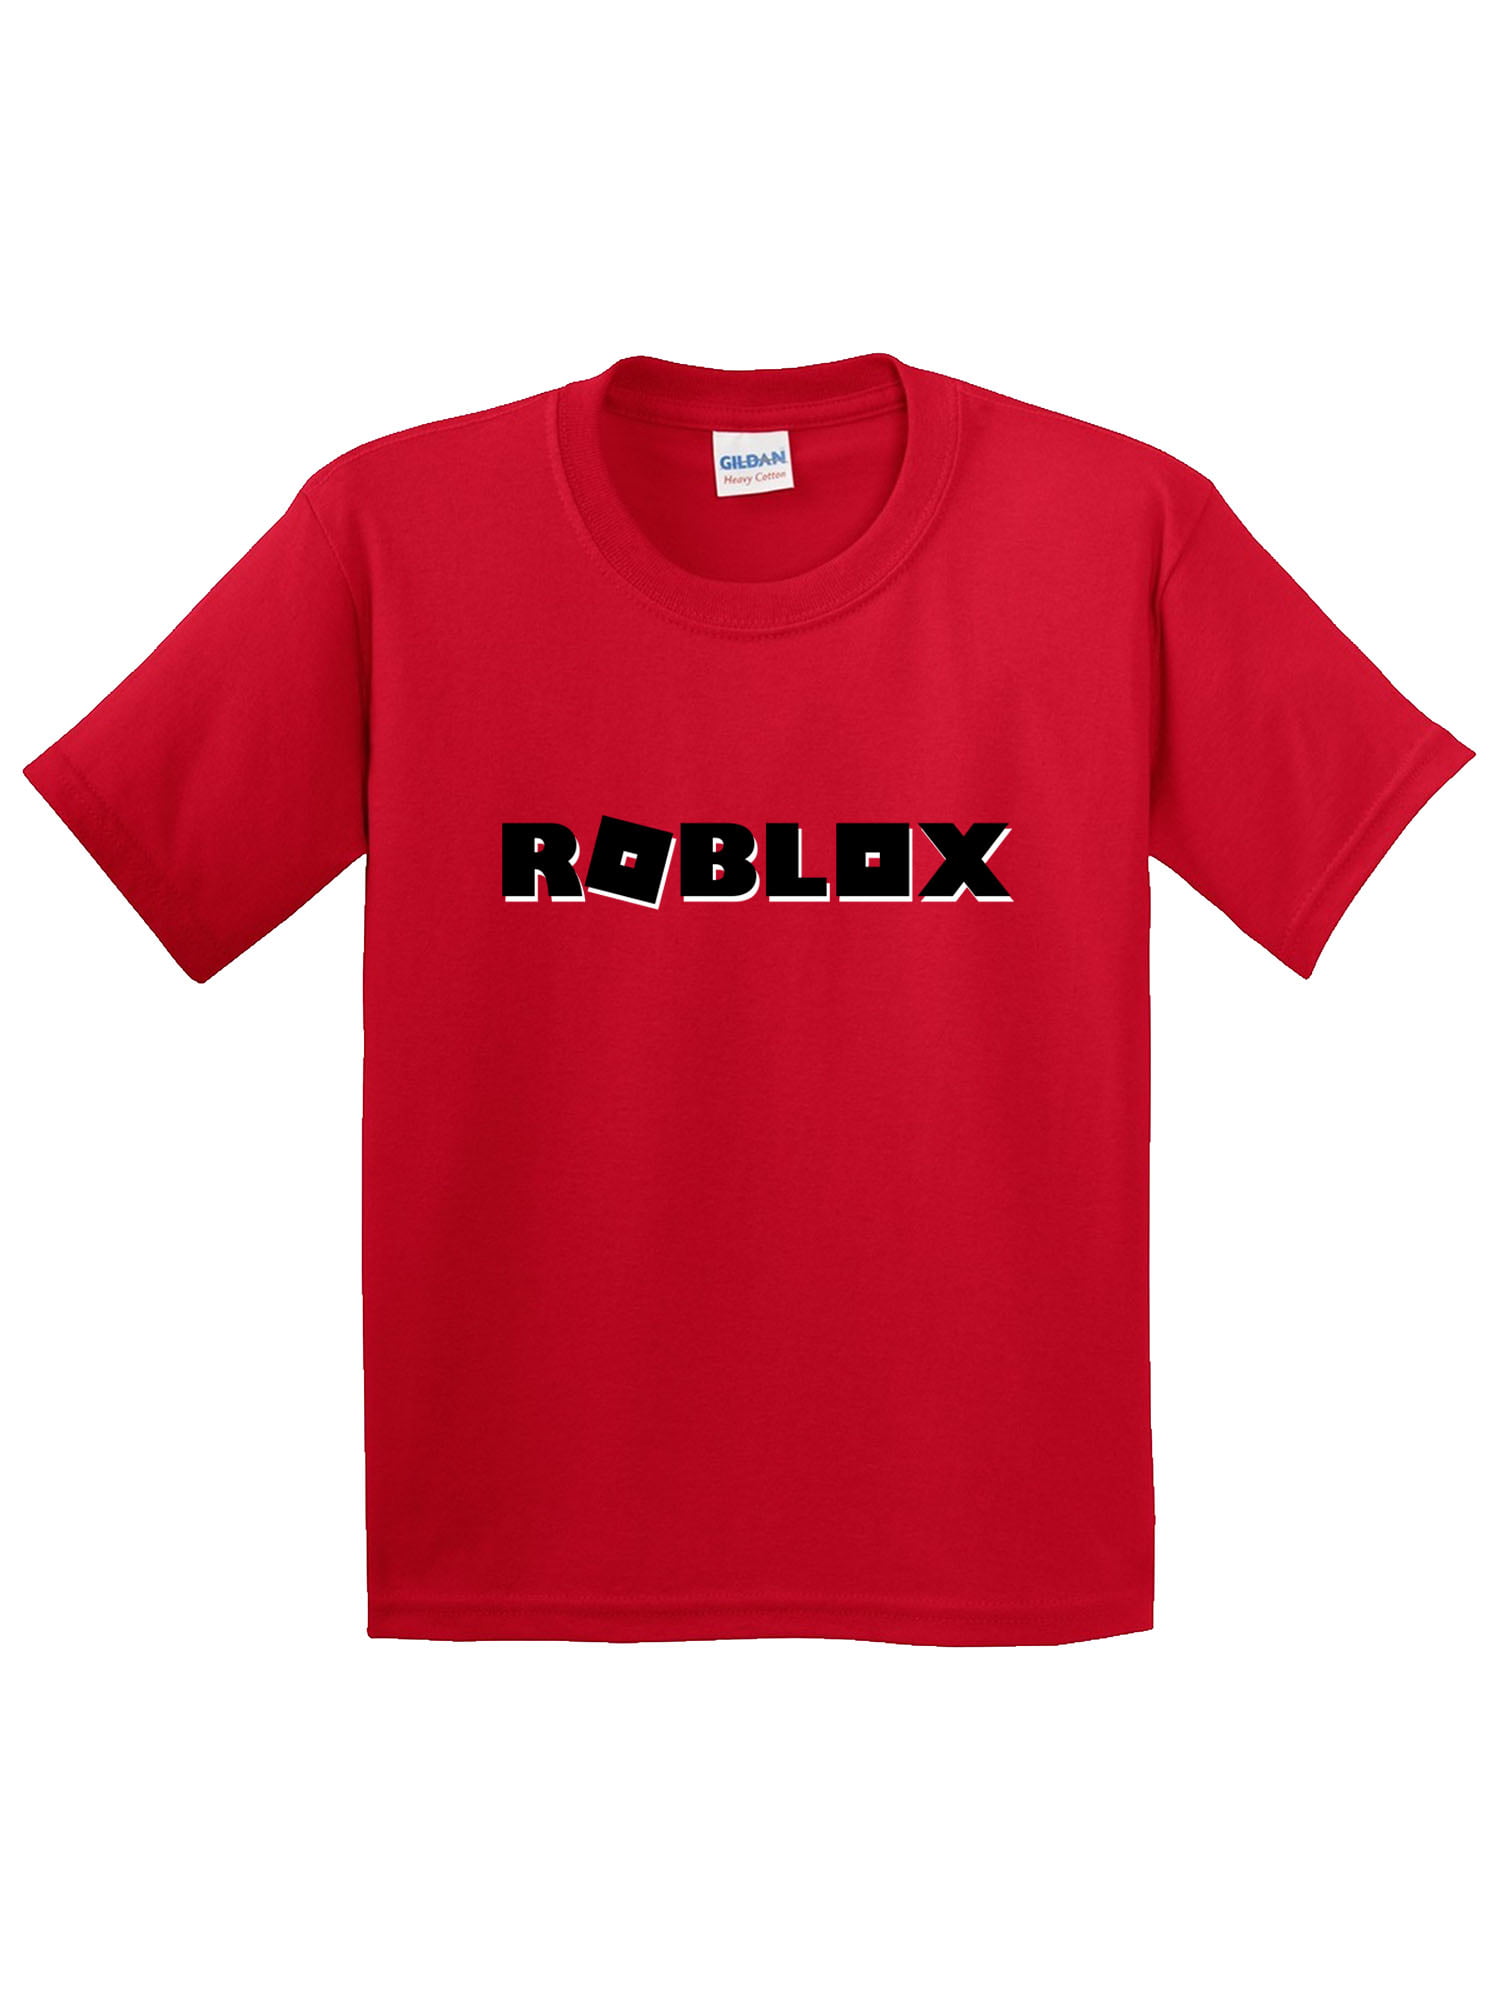 New Way New Way 1168 Youth T Shirt Roblox Block Logo Game Accent Small Red Walmart Com Walmart Com - t shirt roblox red